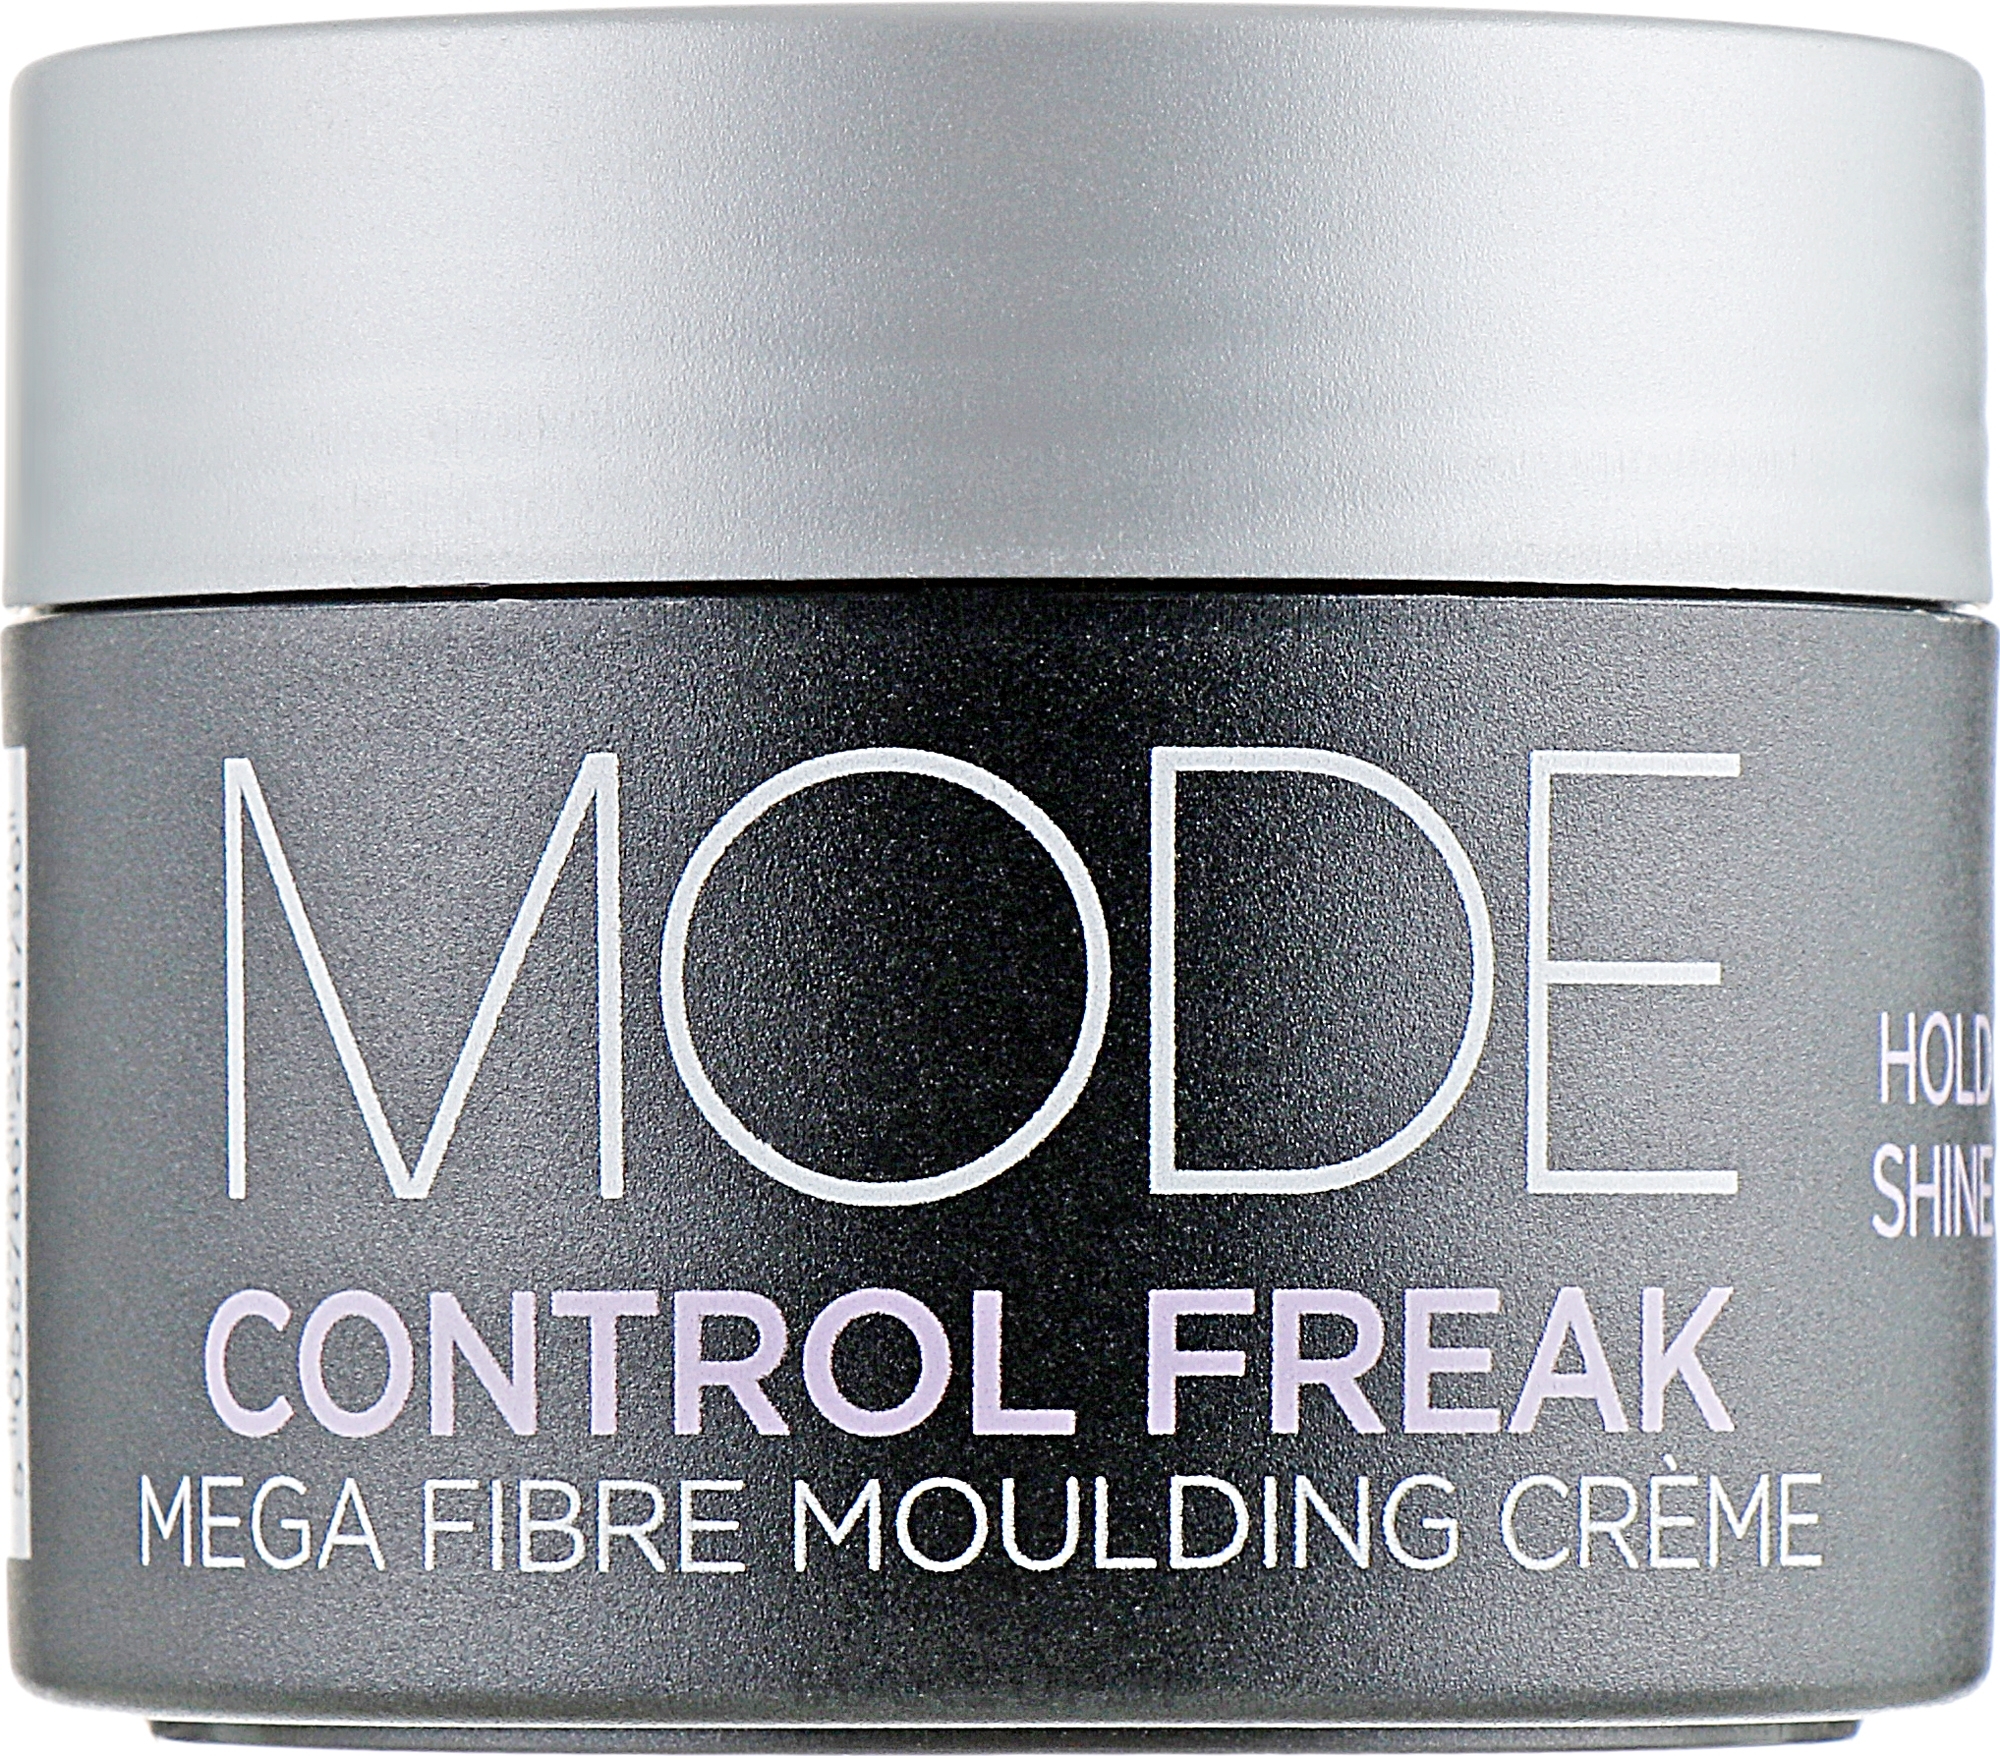 Texturizing Hair Cream - Affinage Salon Professional Mode Control Freak Moulding Cream  — photo 75 ml